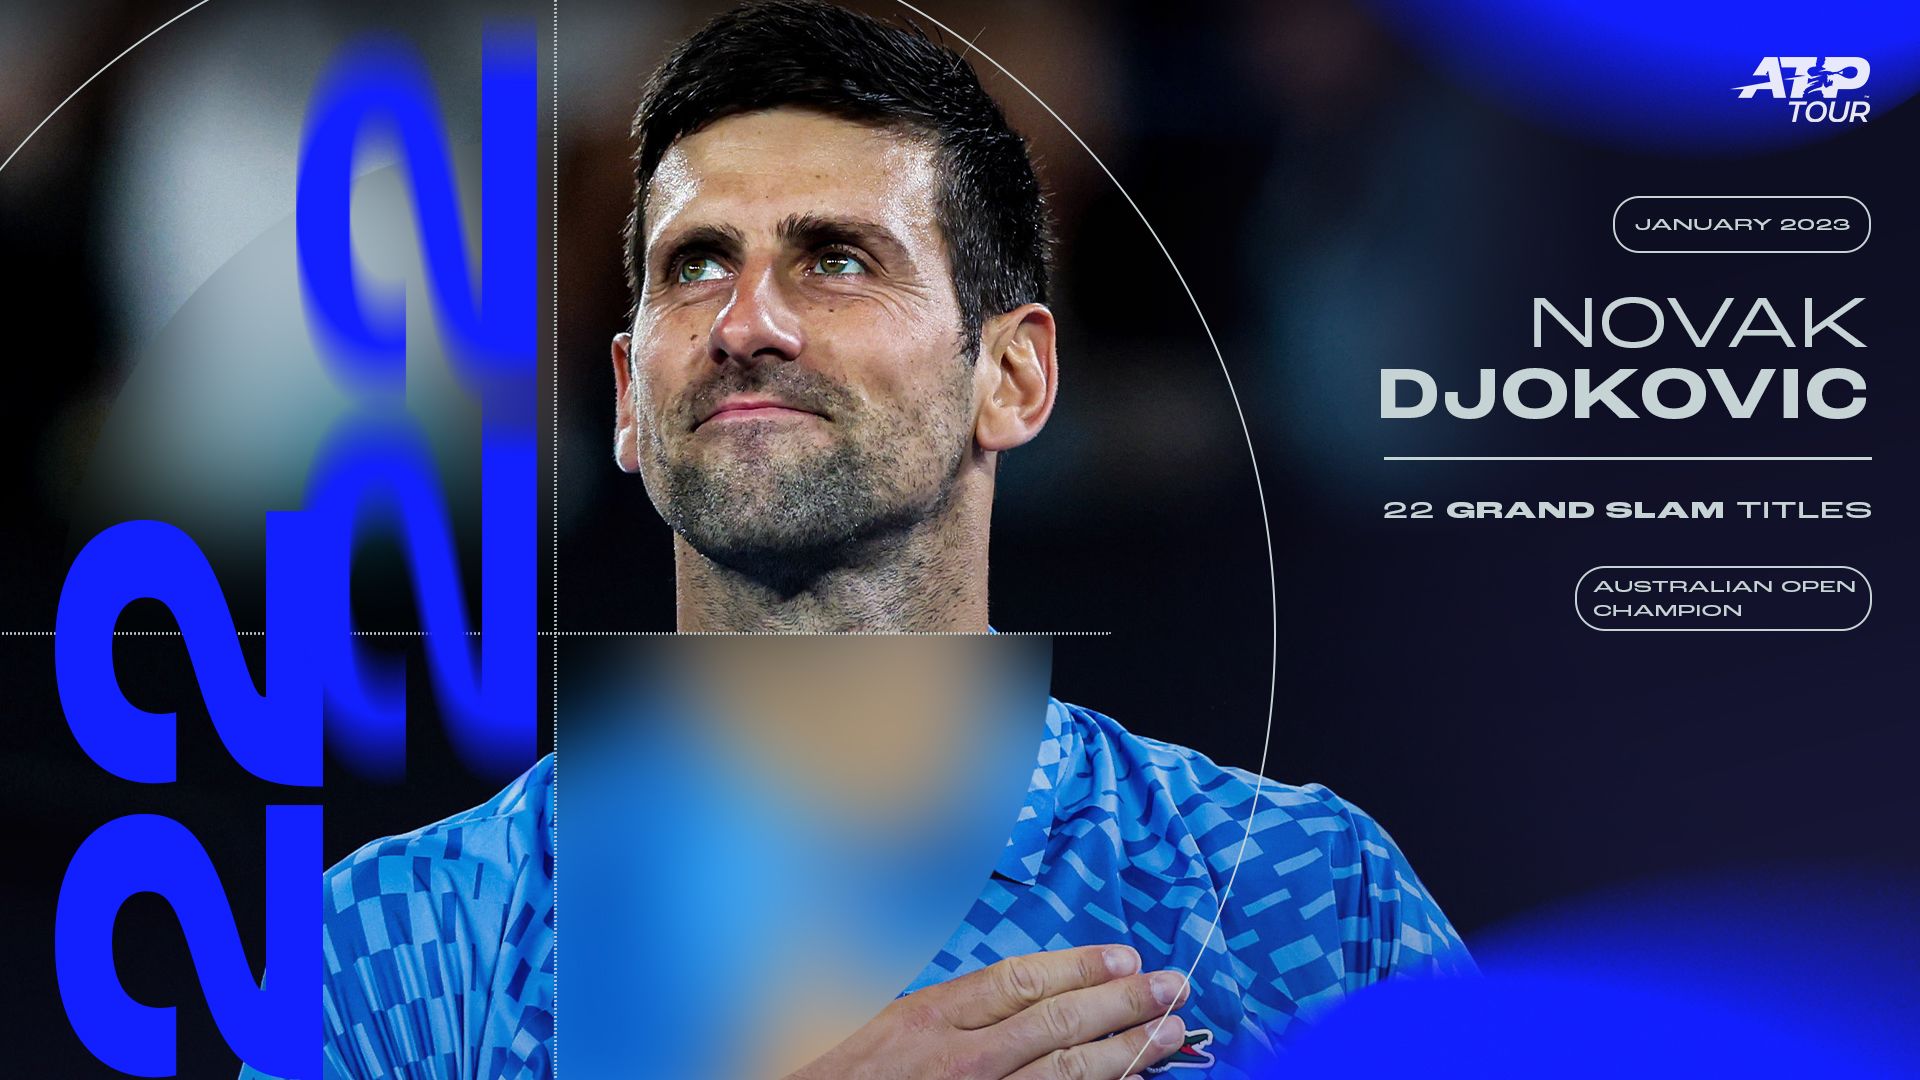 Longform: Novak Djokovic's 22 Grand Slam Titles